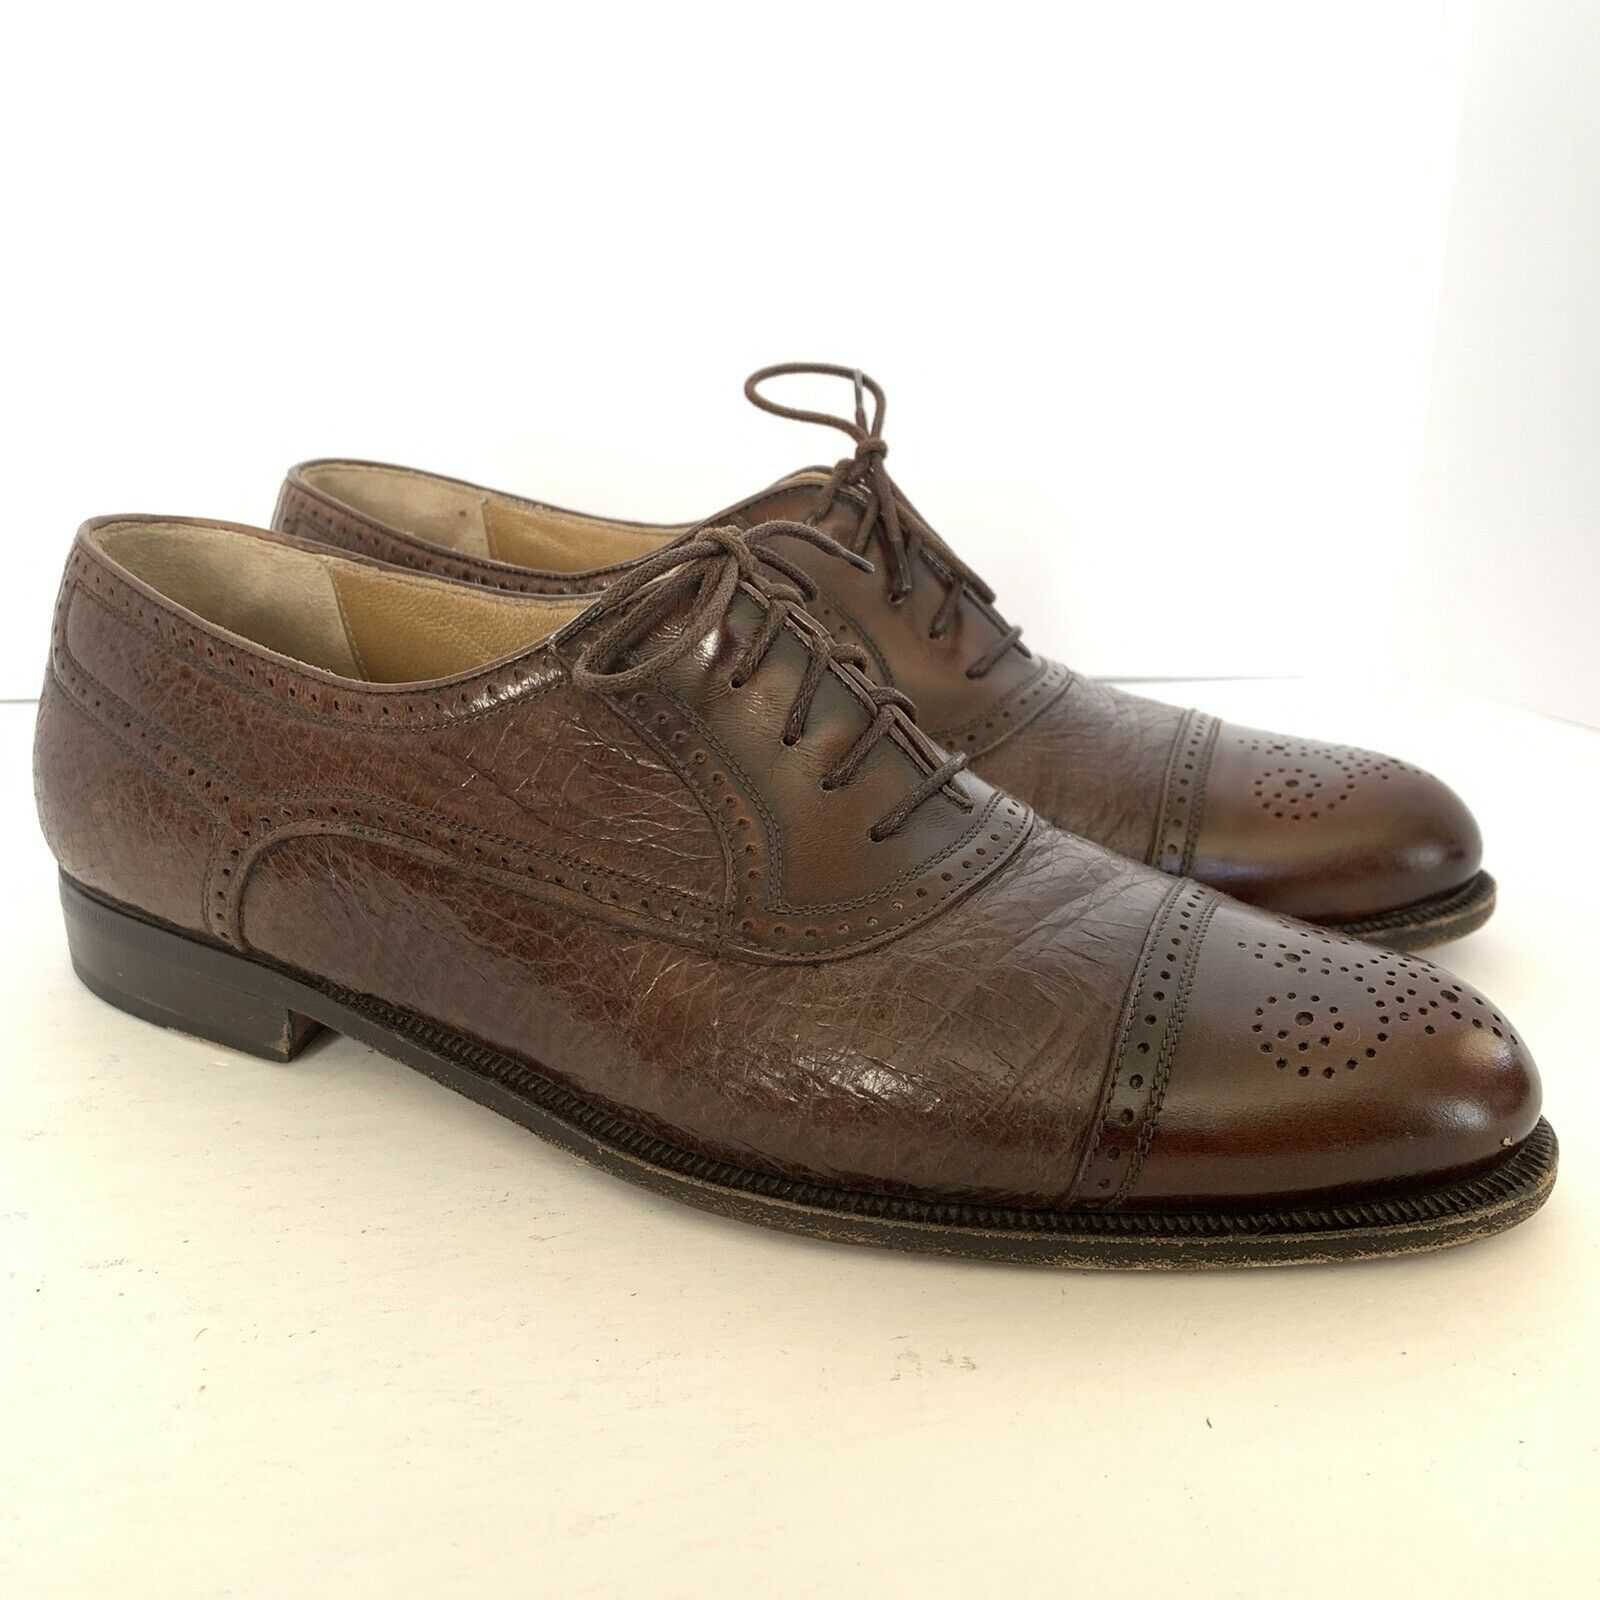 Johnson & Murphy ITALY Men's Captoe Brown Leather Domani Dress Shoes Size 9.5 M